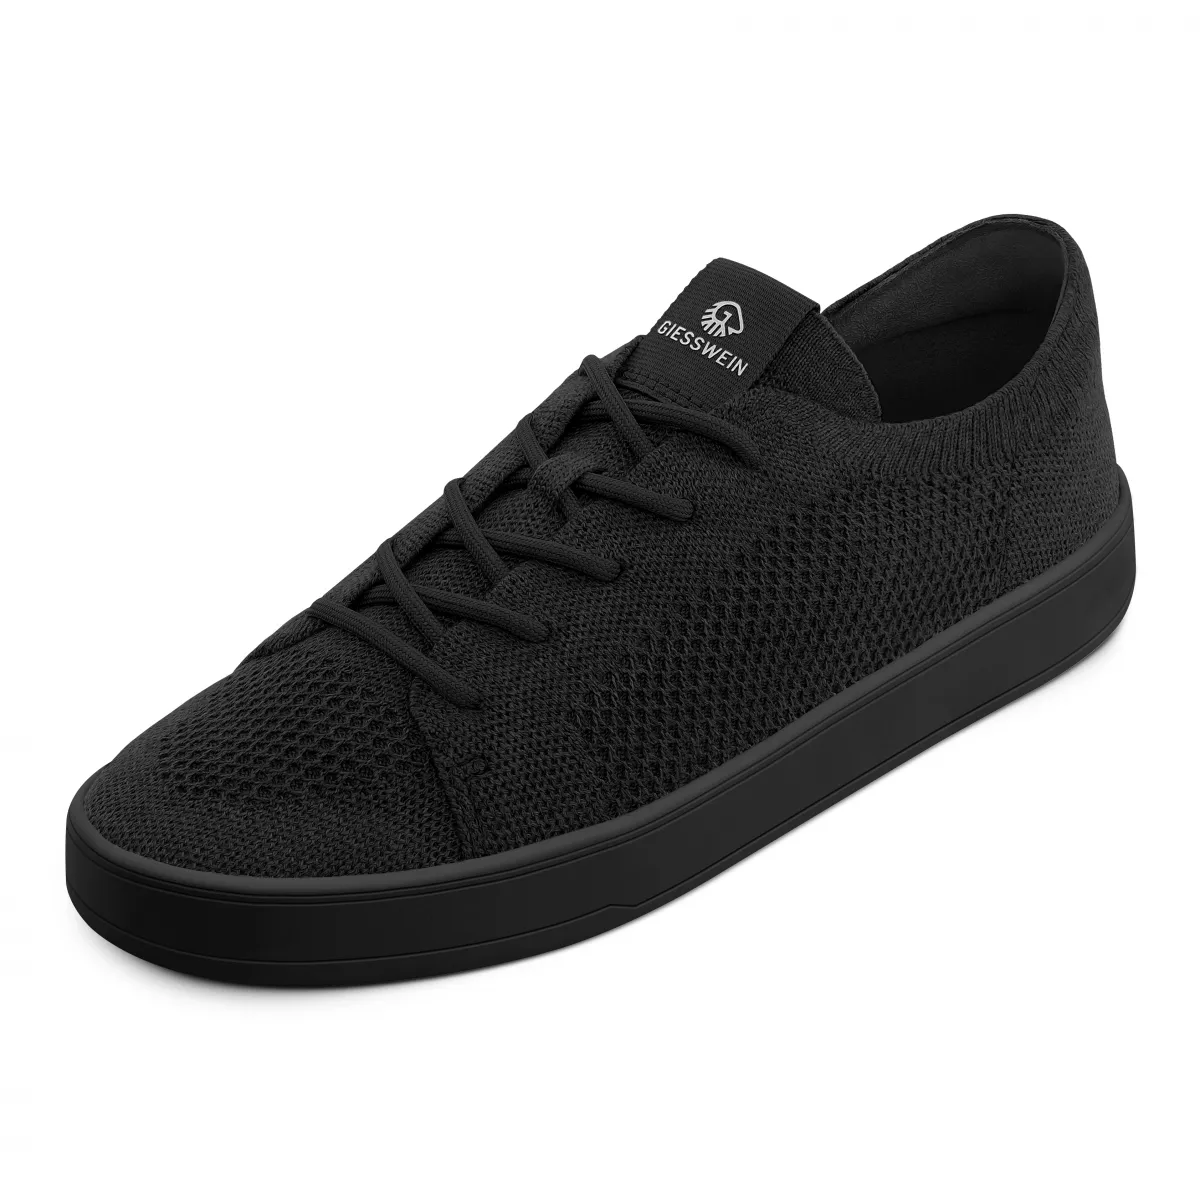 Sneakersi New Merino solid black, dama 37